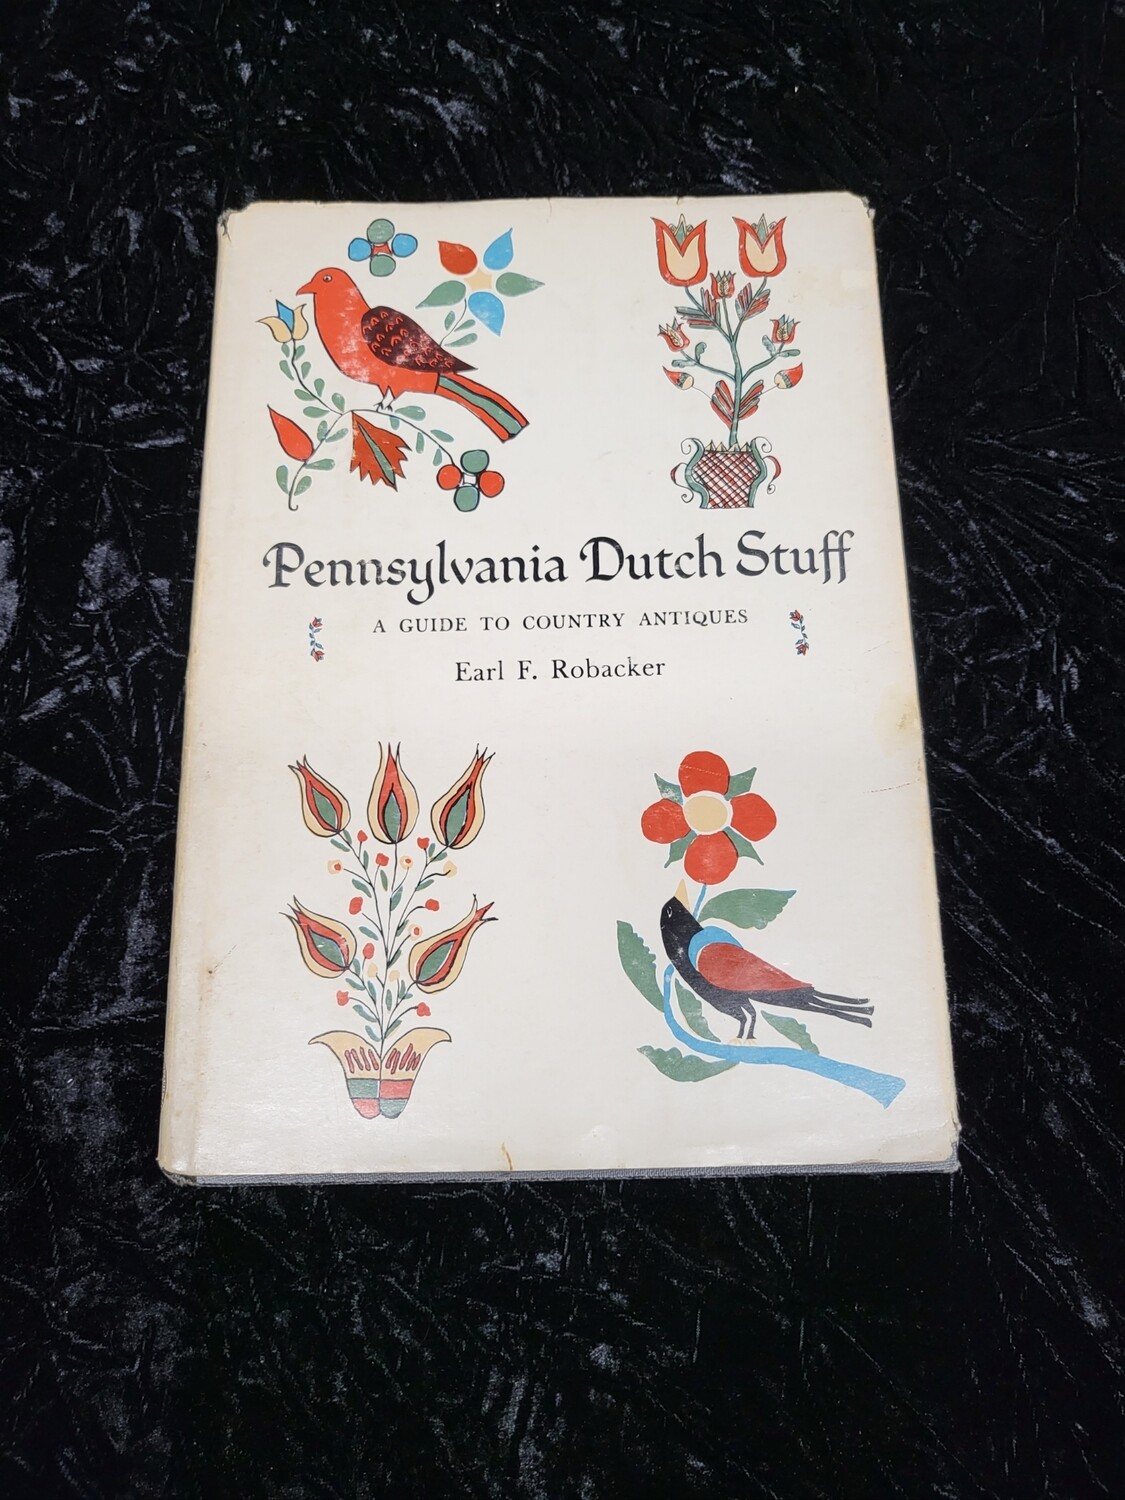 Vintage Pennsylvania Dutch Stuff book